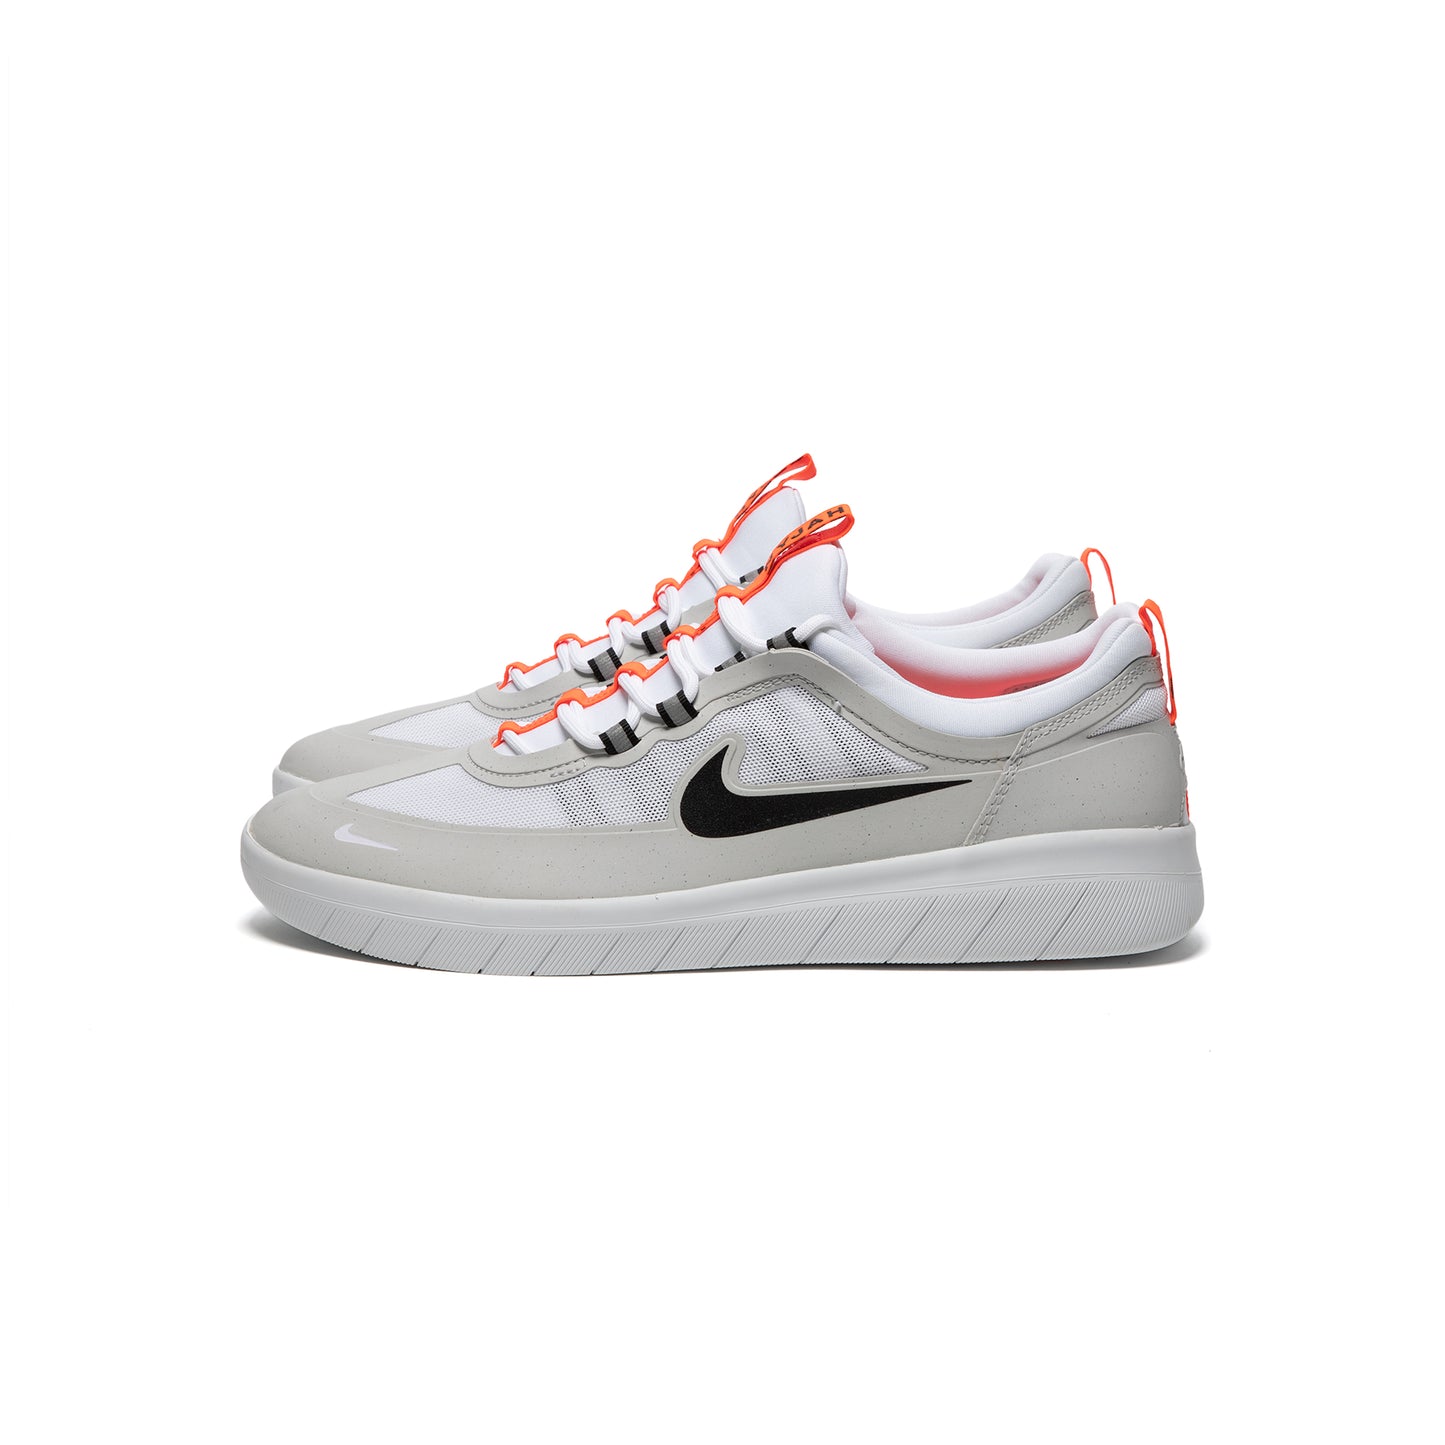 Nike SB Nyjah Free 2 Skate Shoes (Neutral Grey/Black/White/Bright Crimson)